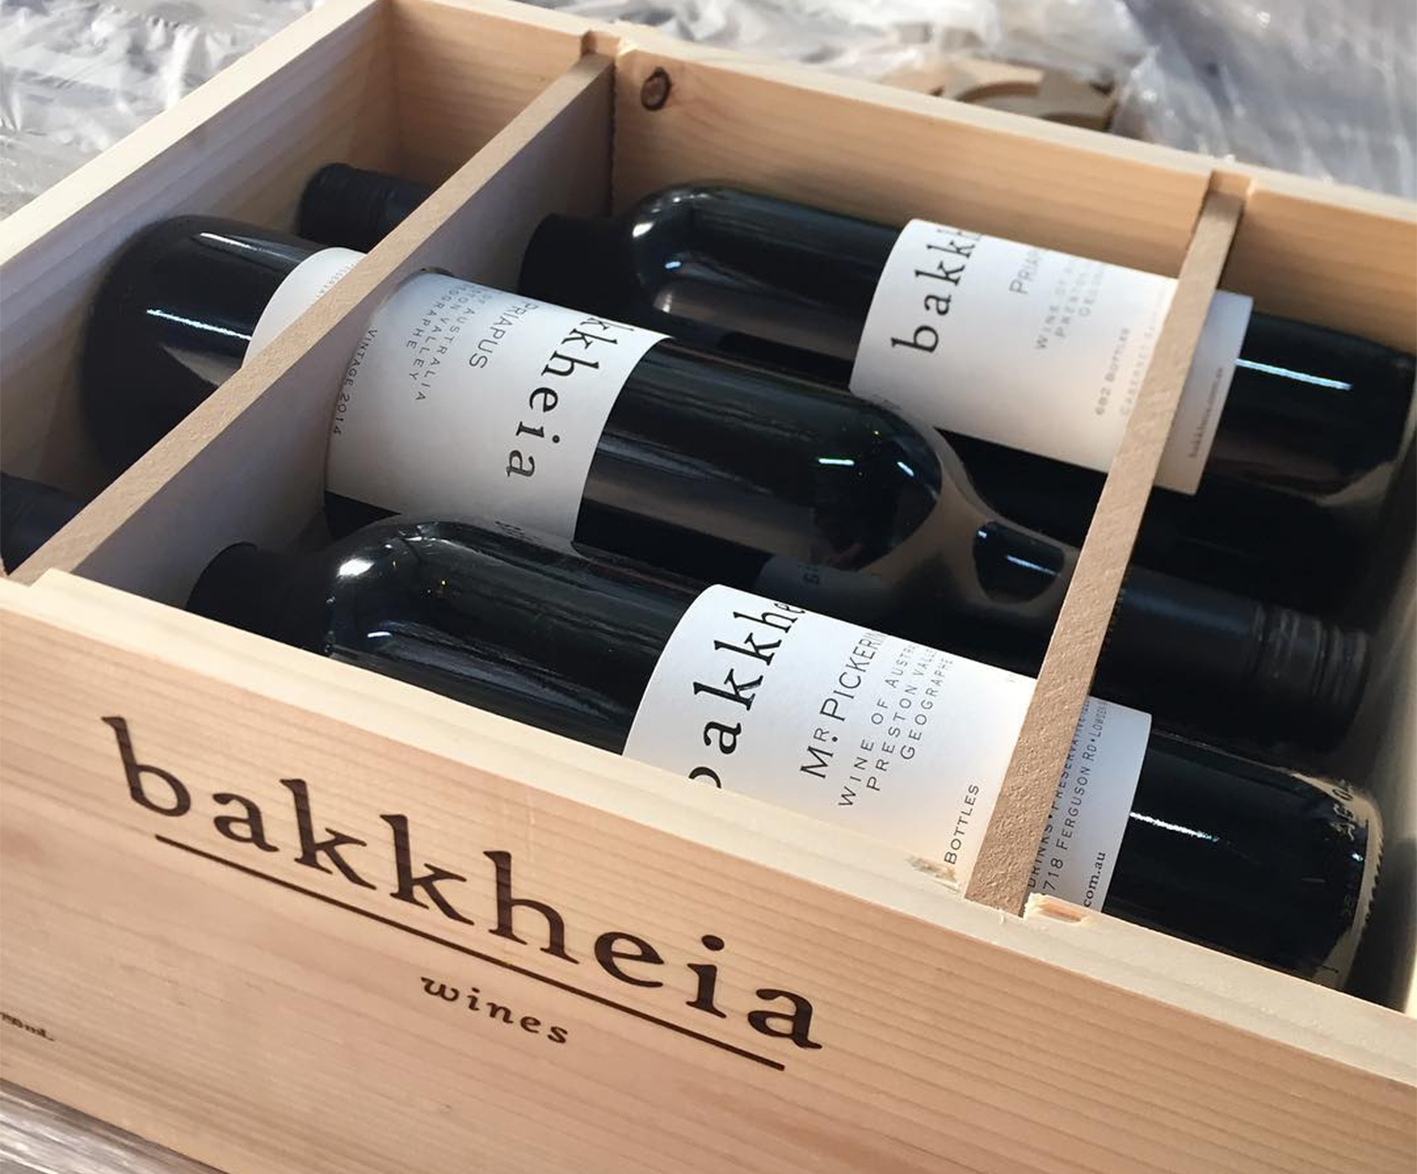 Bakkheia Wine in the Bunbury Geographe